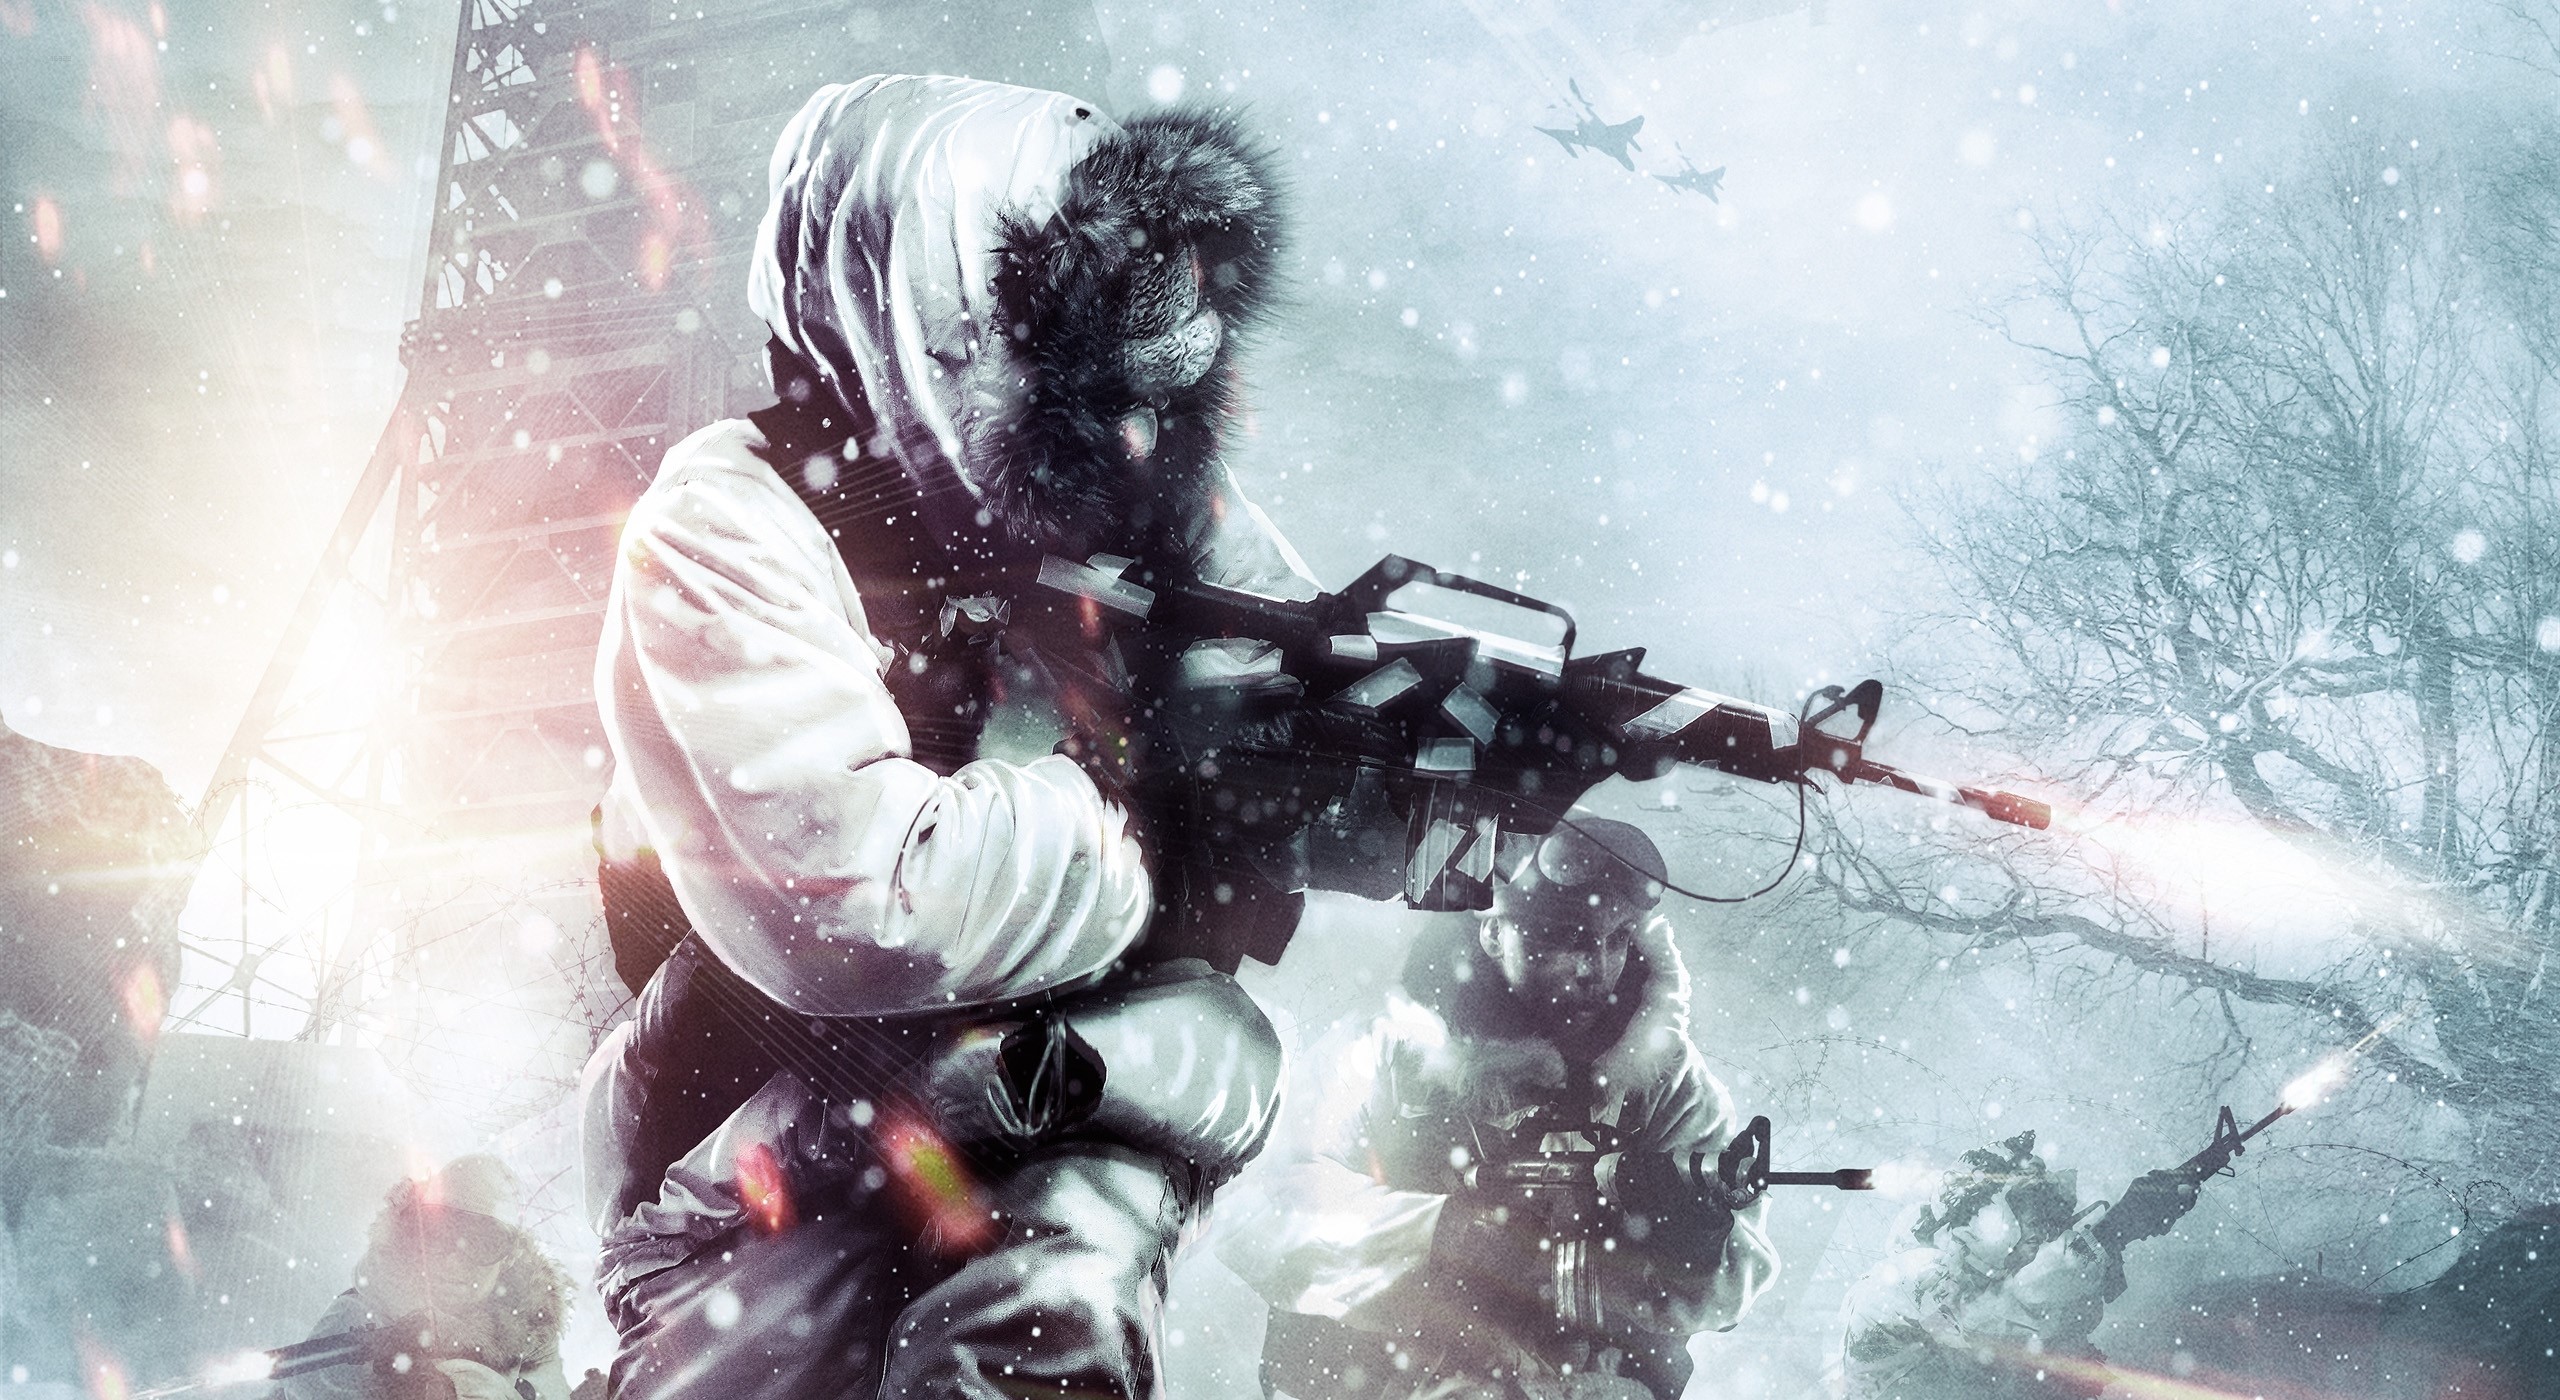 Call of Duty: Black Ops HD Wallpaper